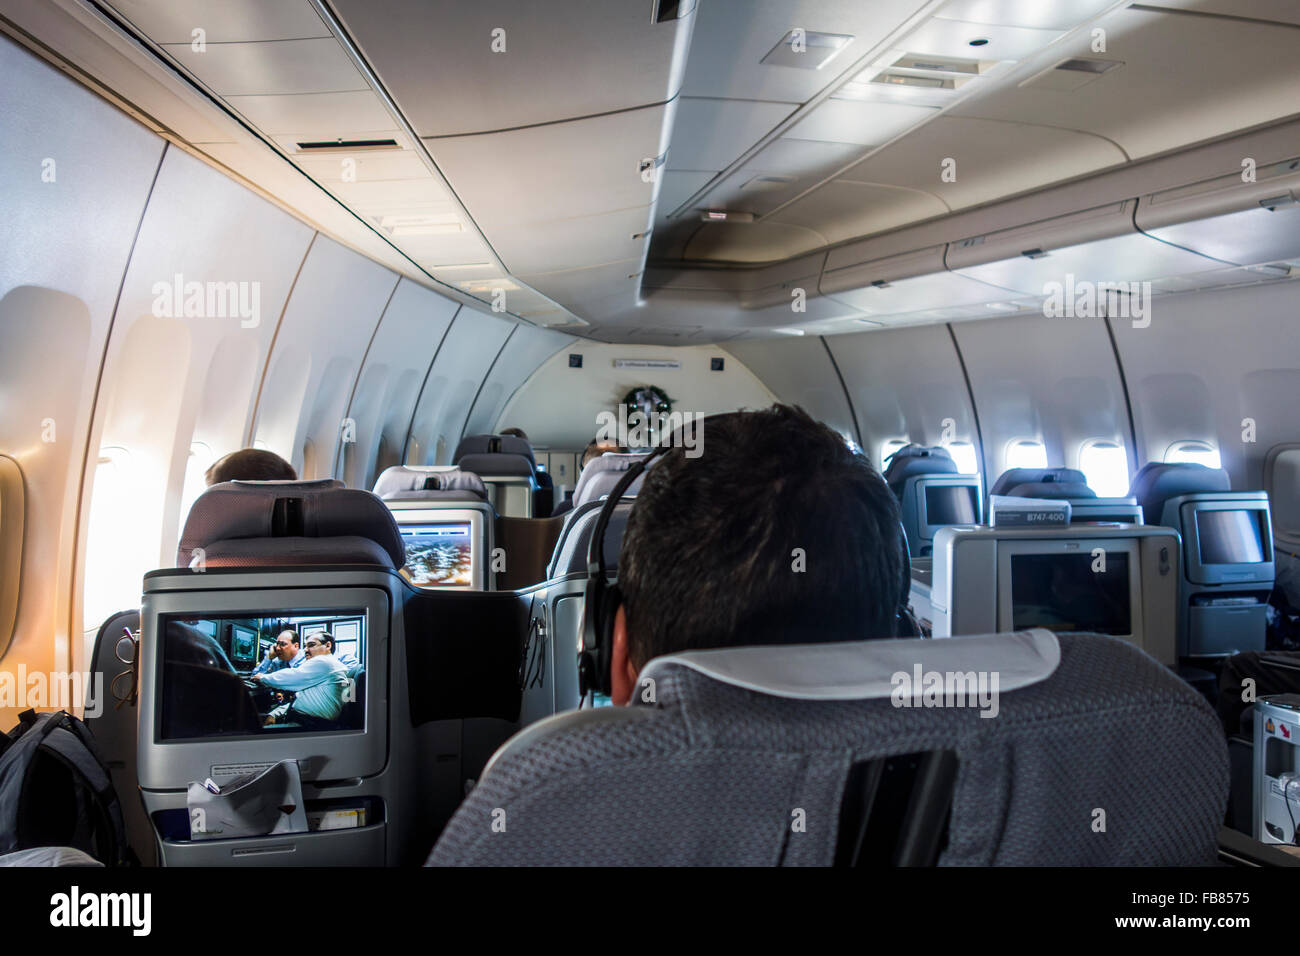 passengers in business class cabin watching entertainment screens, Lufthansa 747 plane in flight Stock Photo